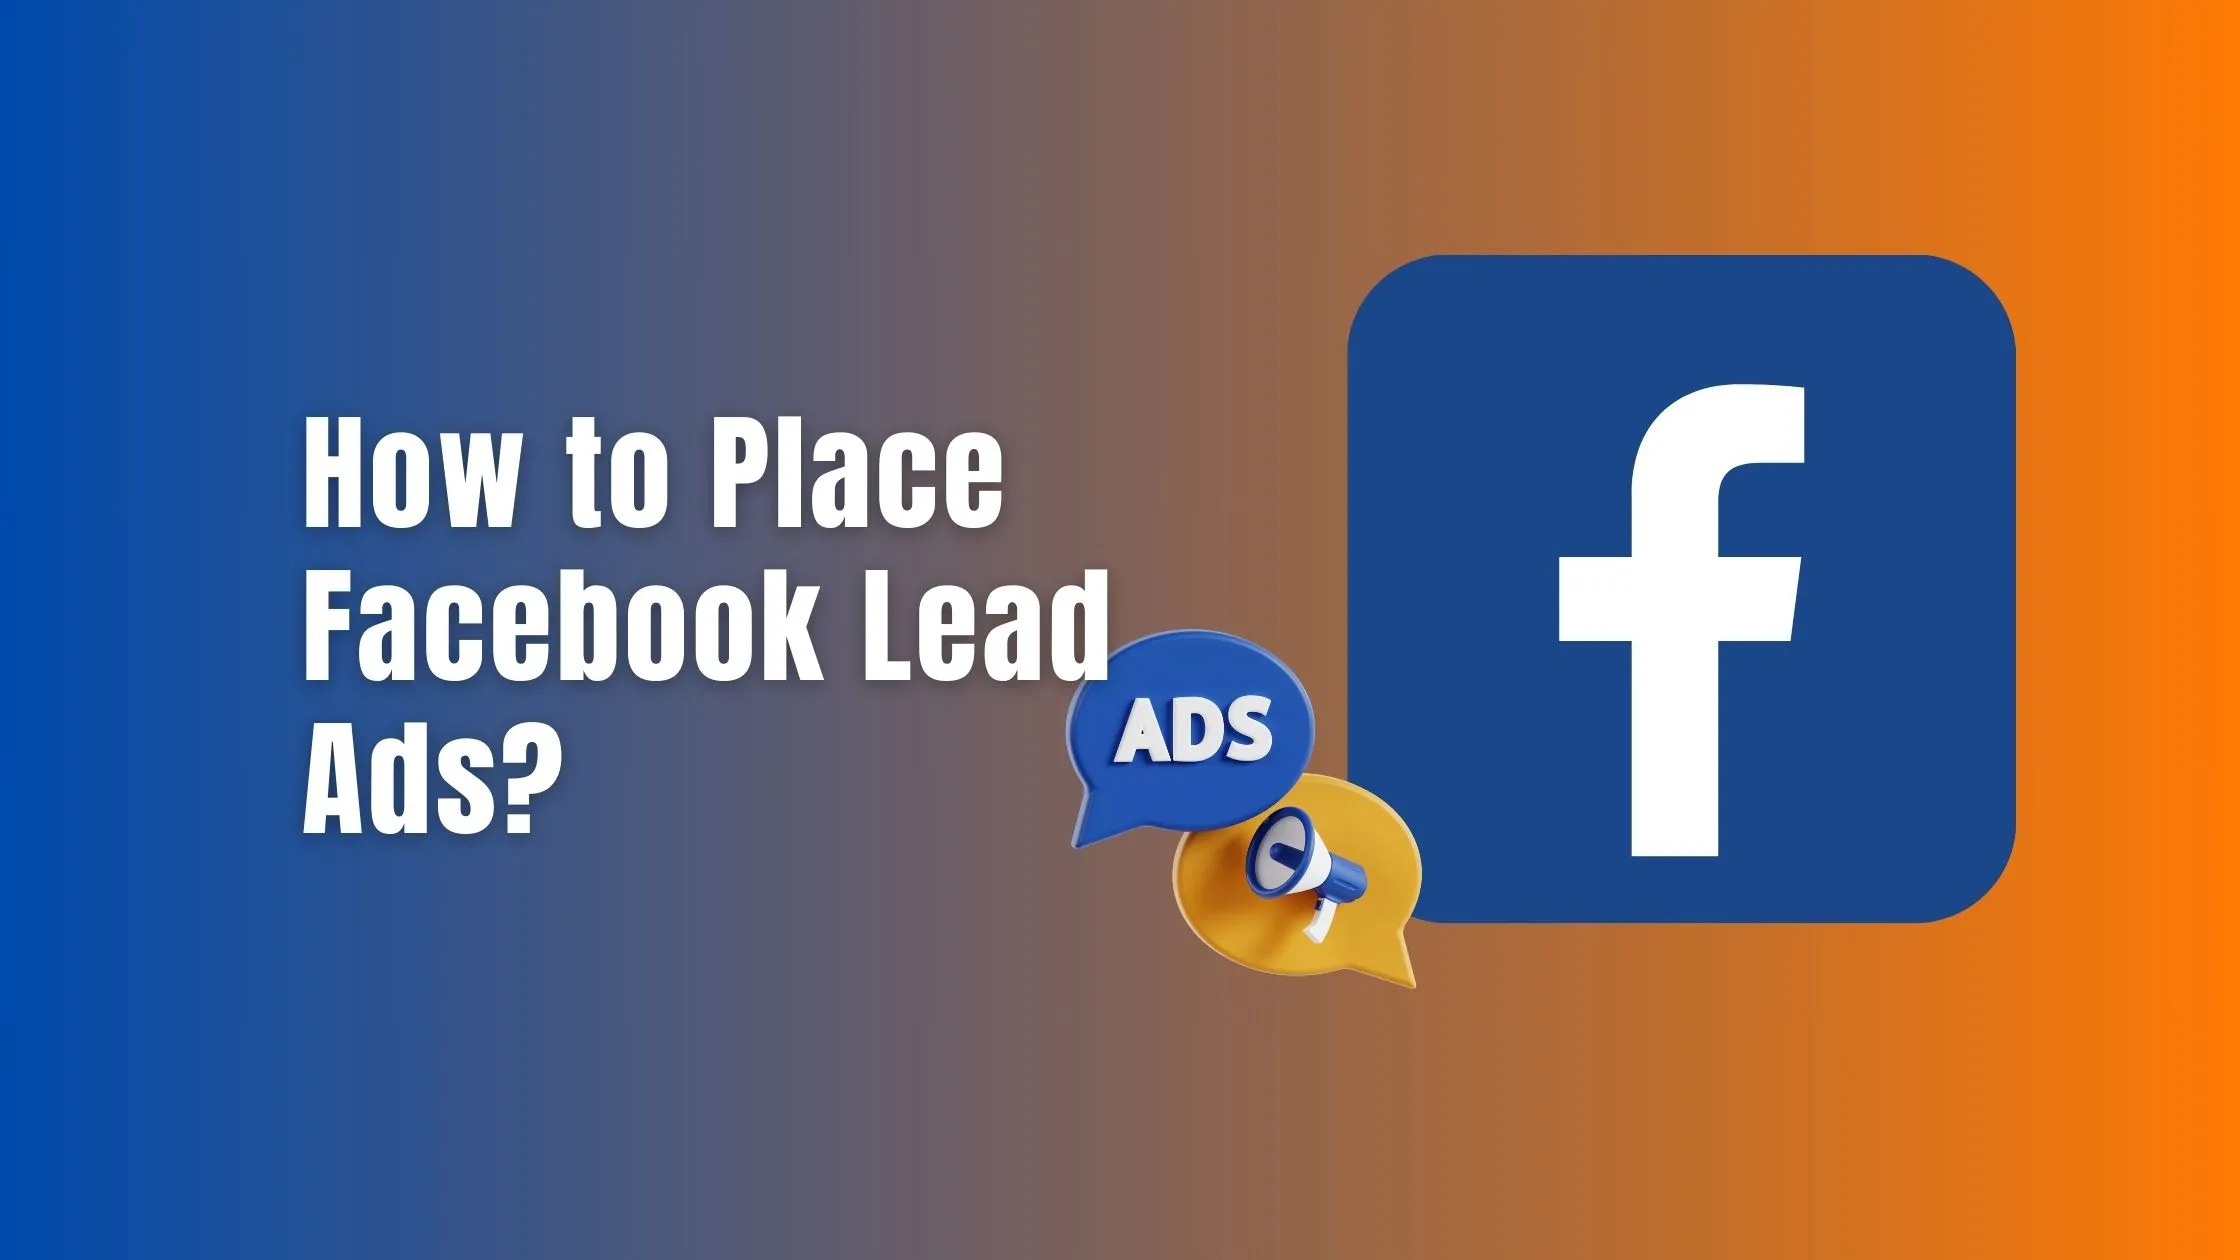 facebook lead ads